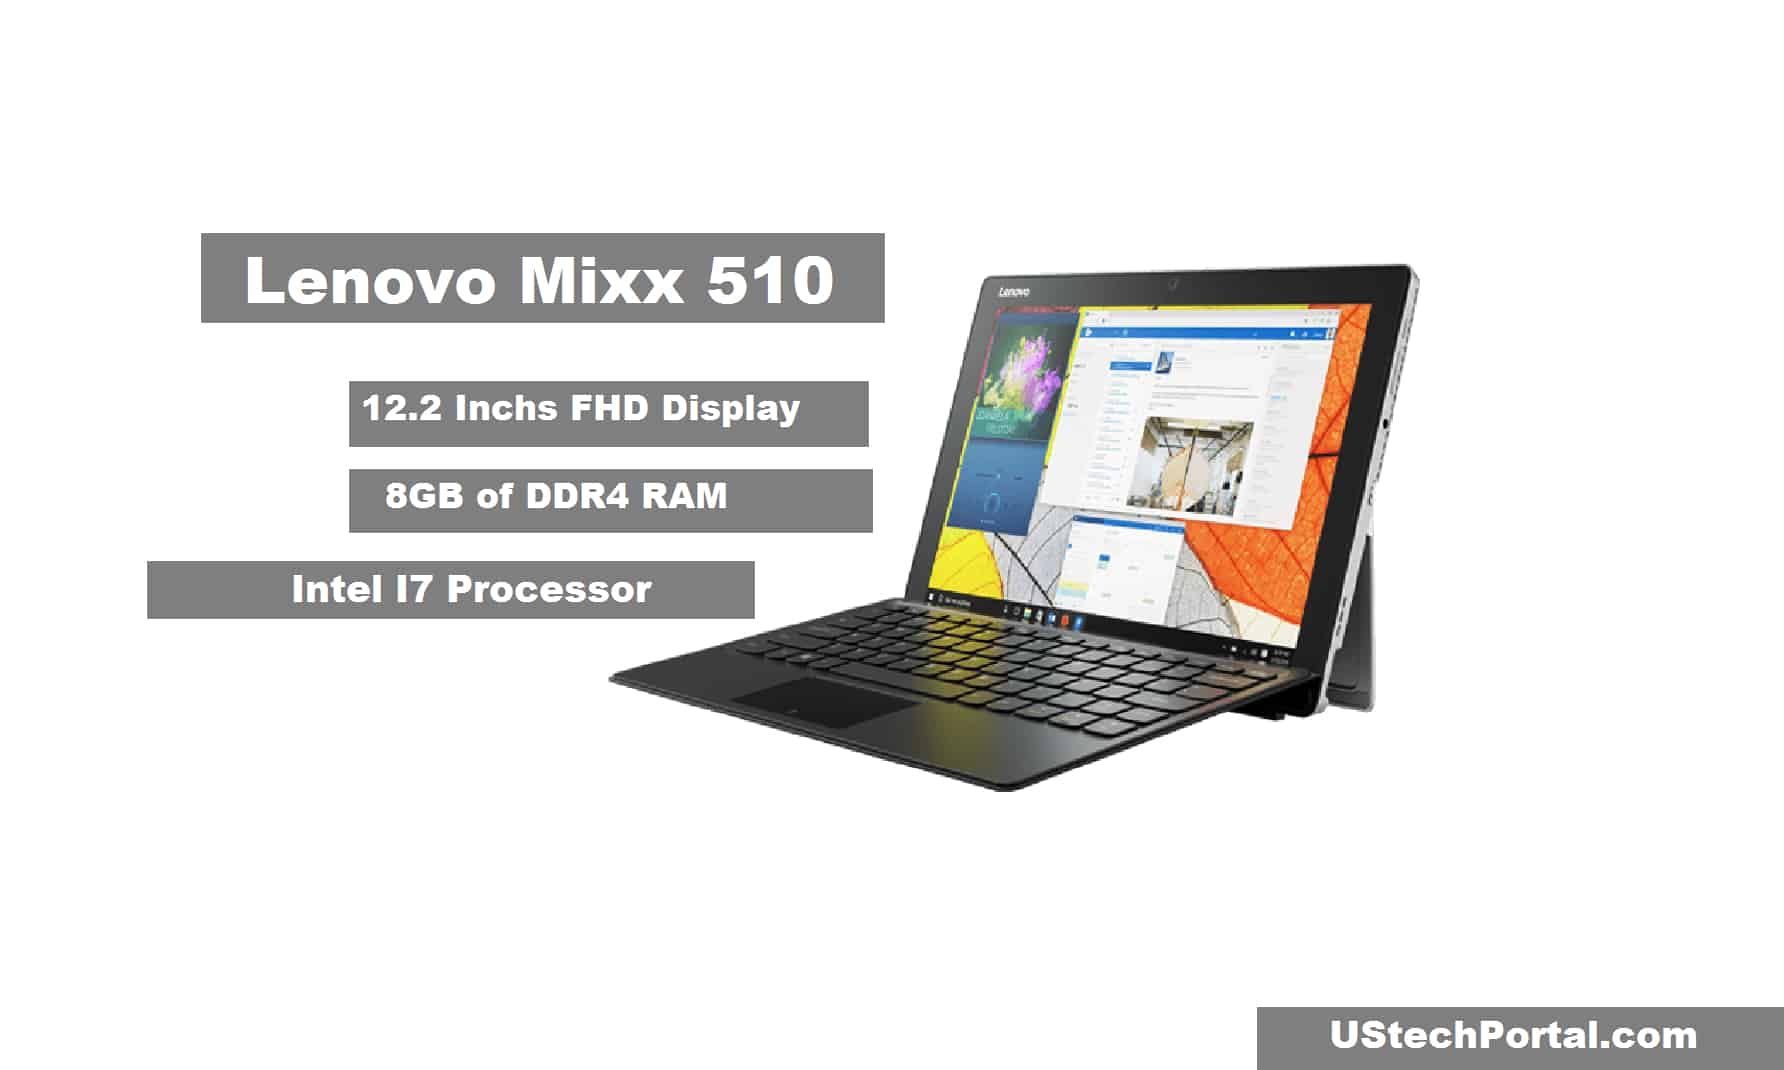 Lenovo Mixx 510 Review